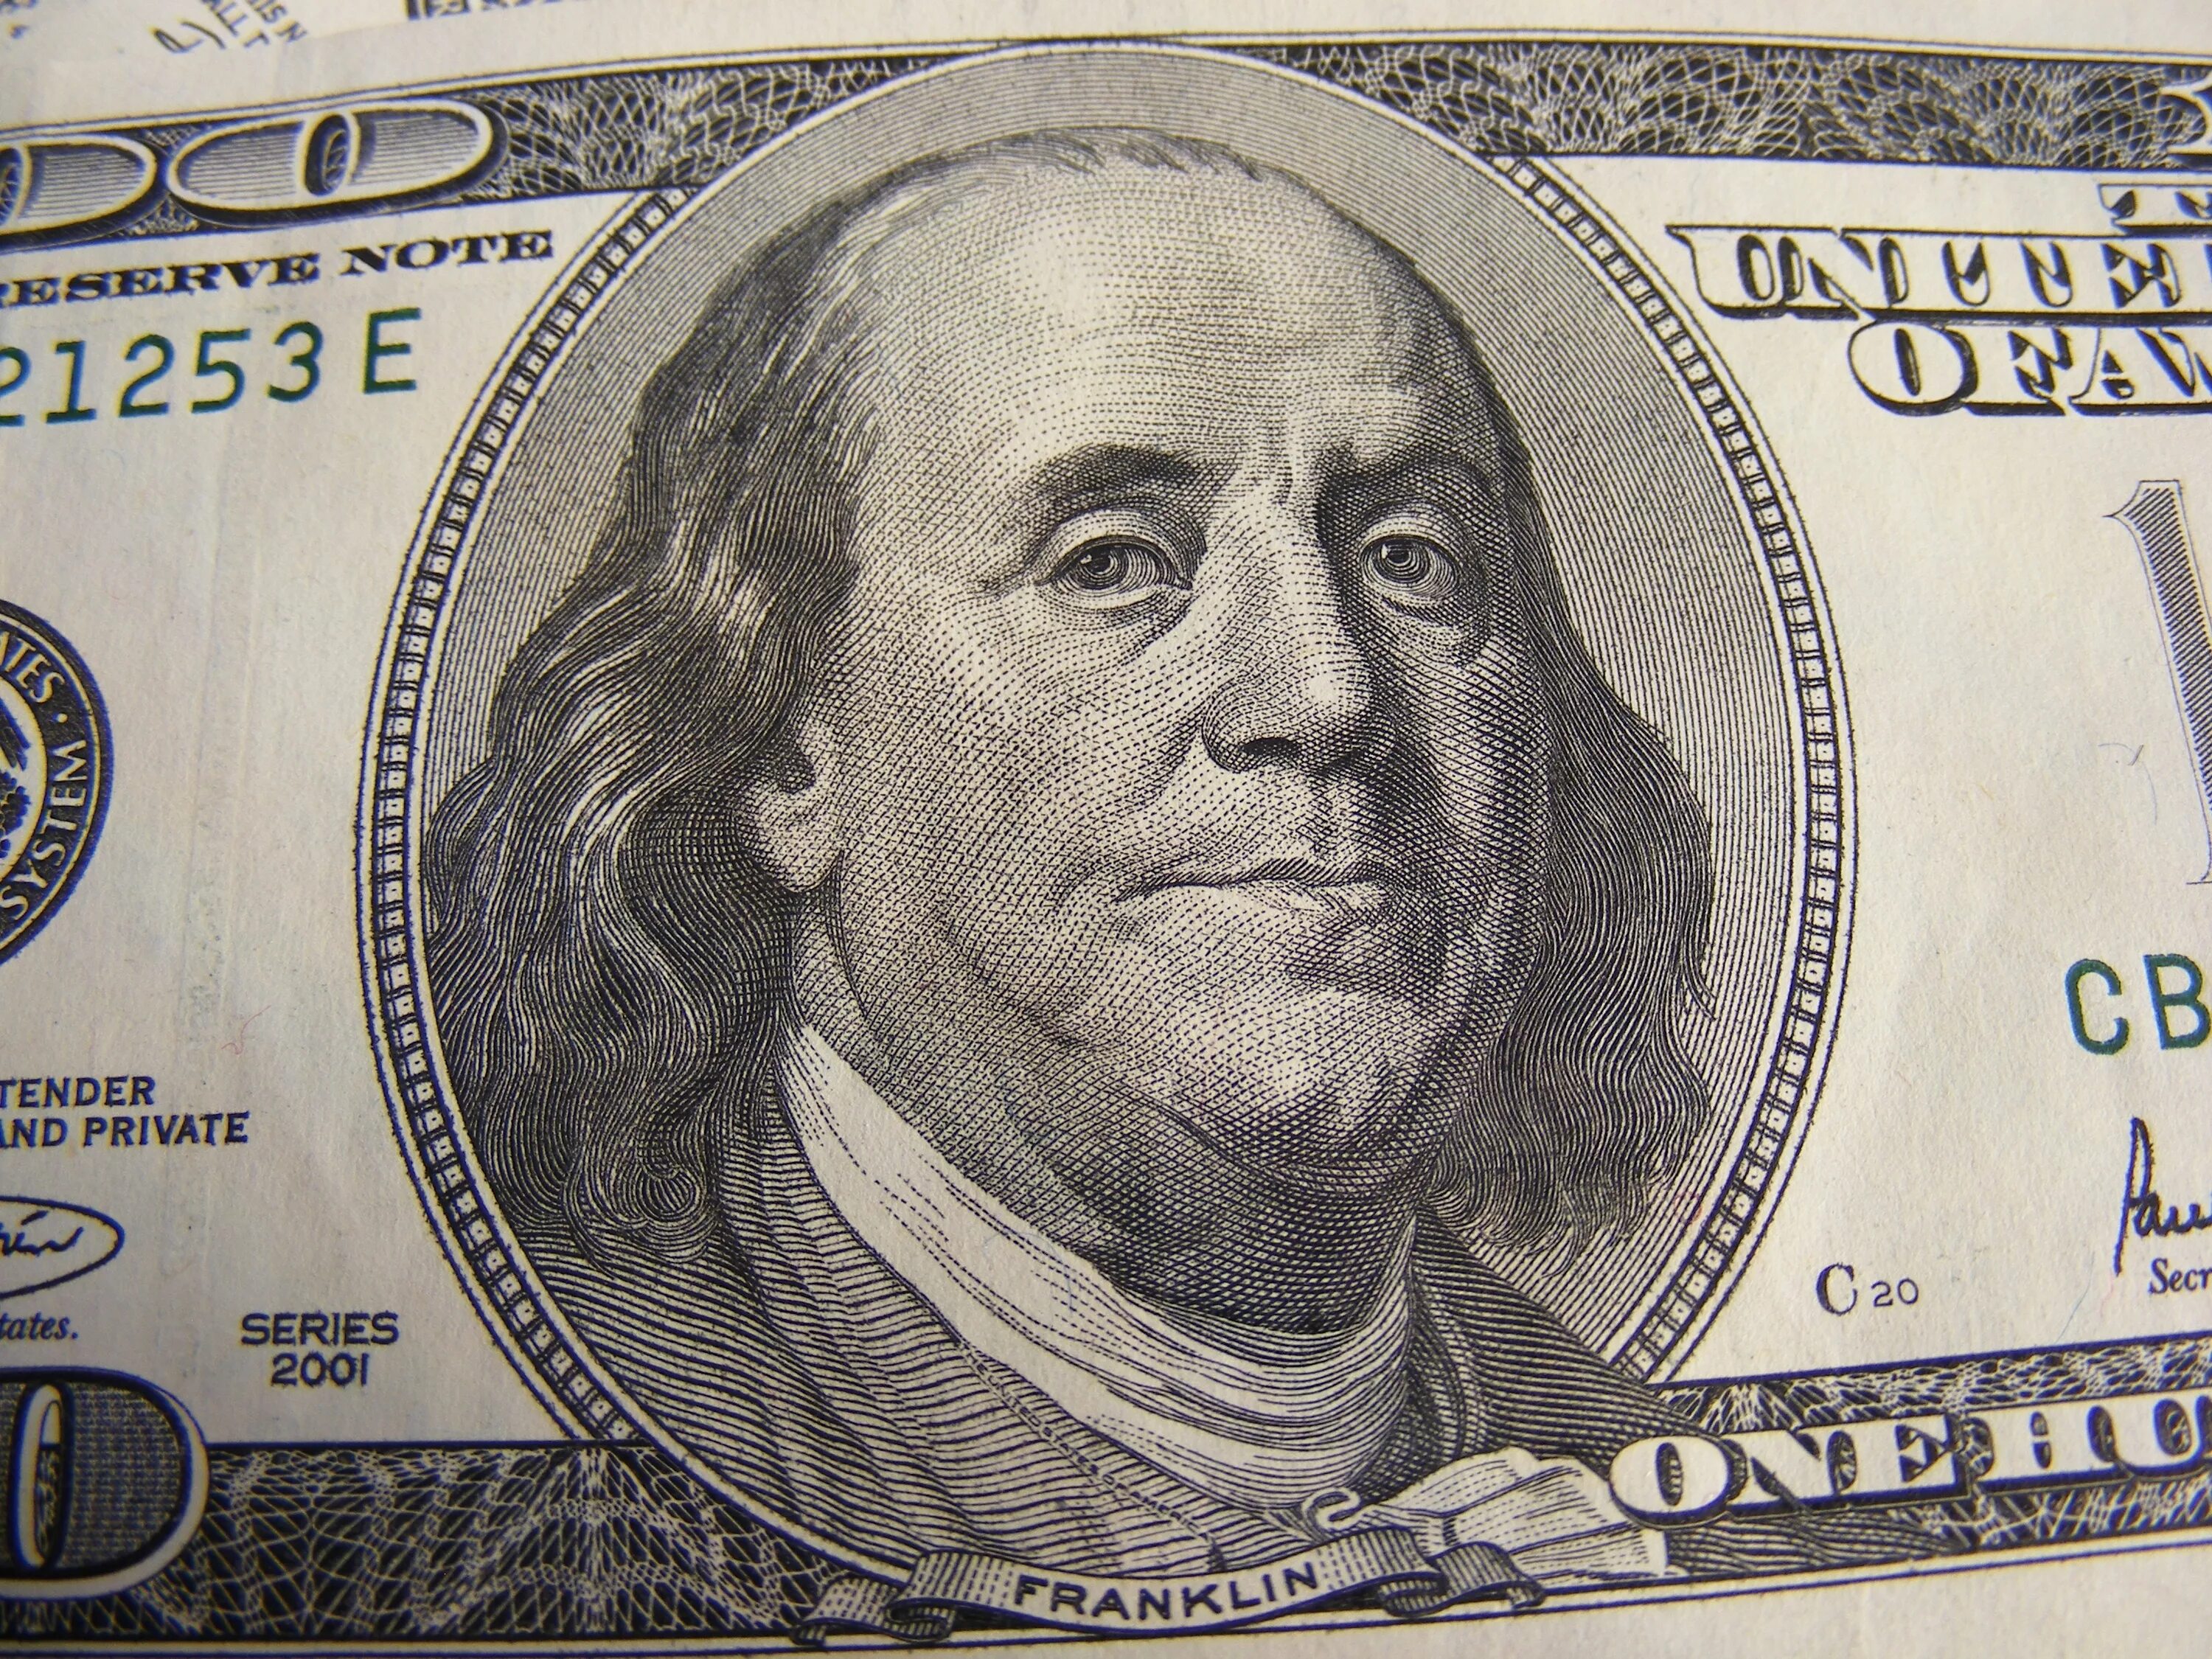 Франклин купюра. Бенджамин Франклин на 100 долларах. Франклин доллар купюра. Франклин 100 долларов. Бенджамин Франклин купюра.